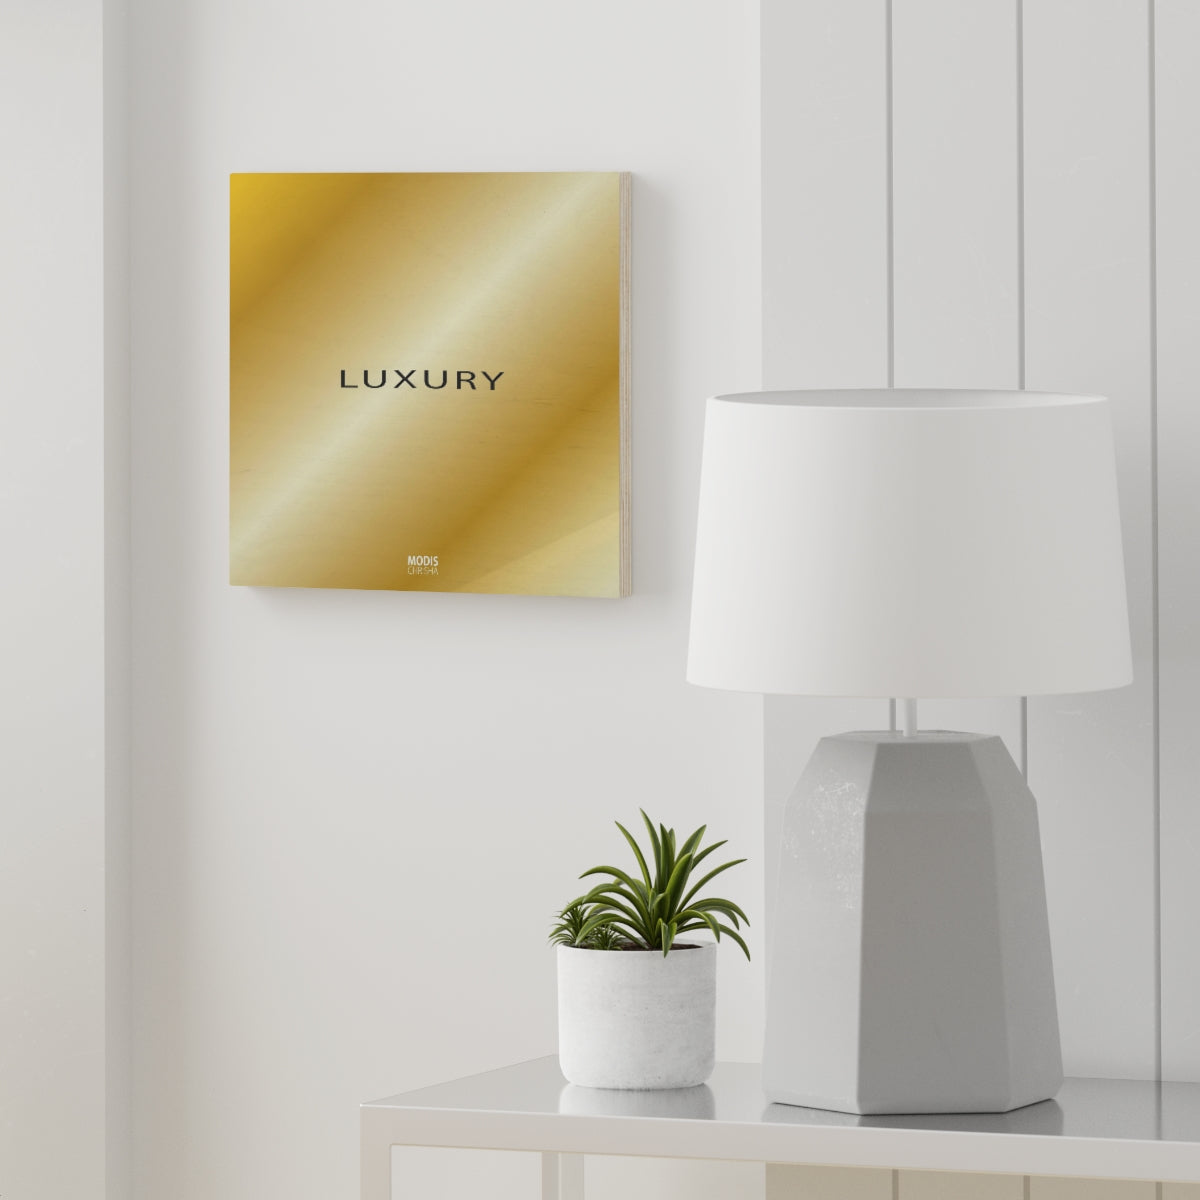 Wood Canvas 7.8“ x 7.8“ - Design Luxury